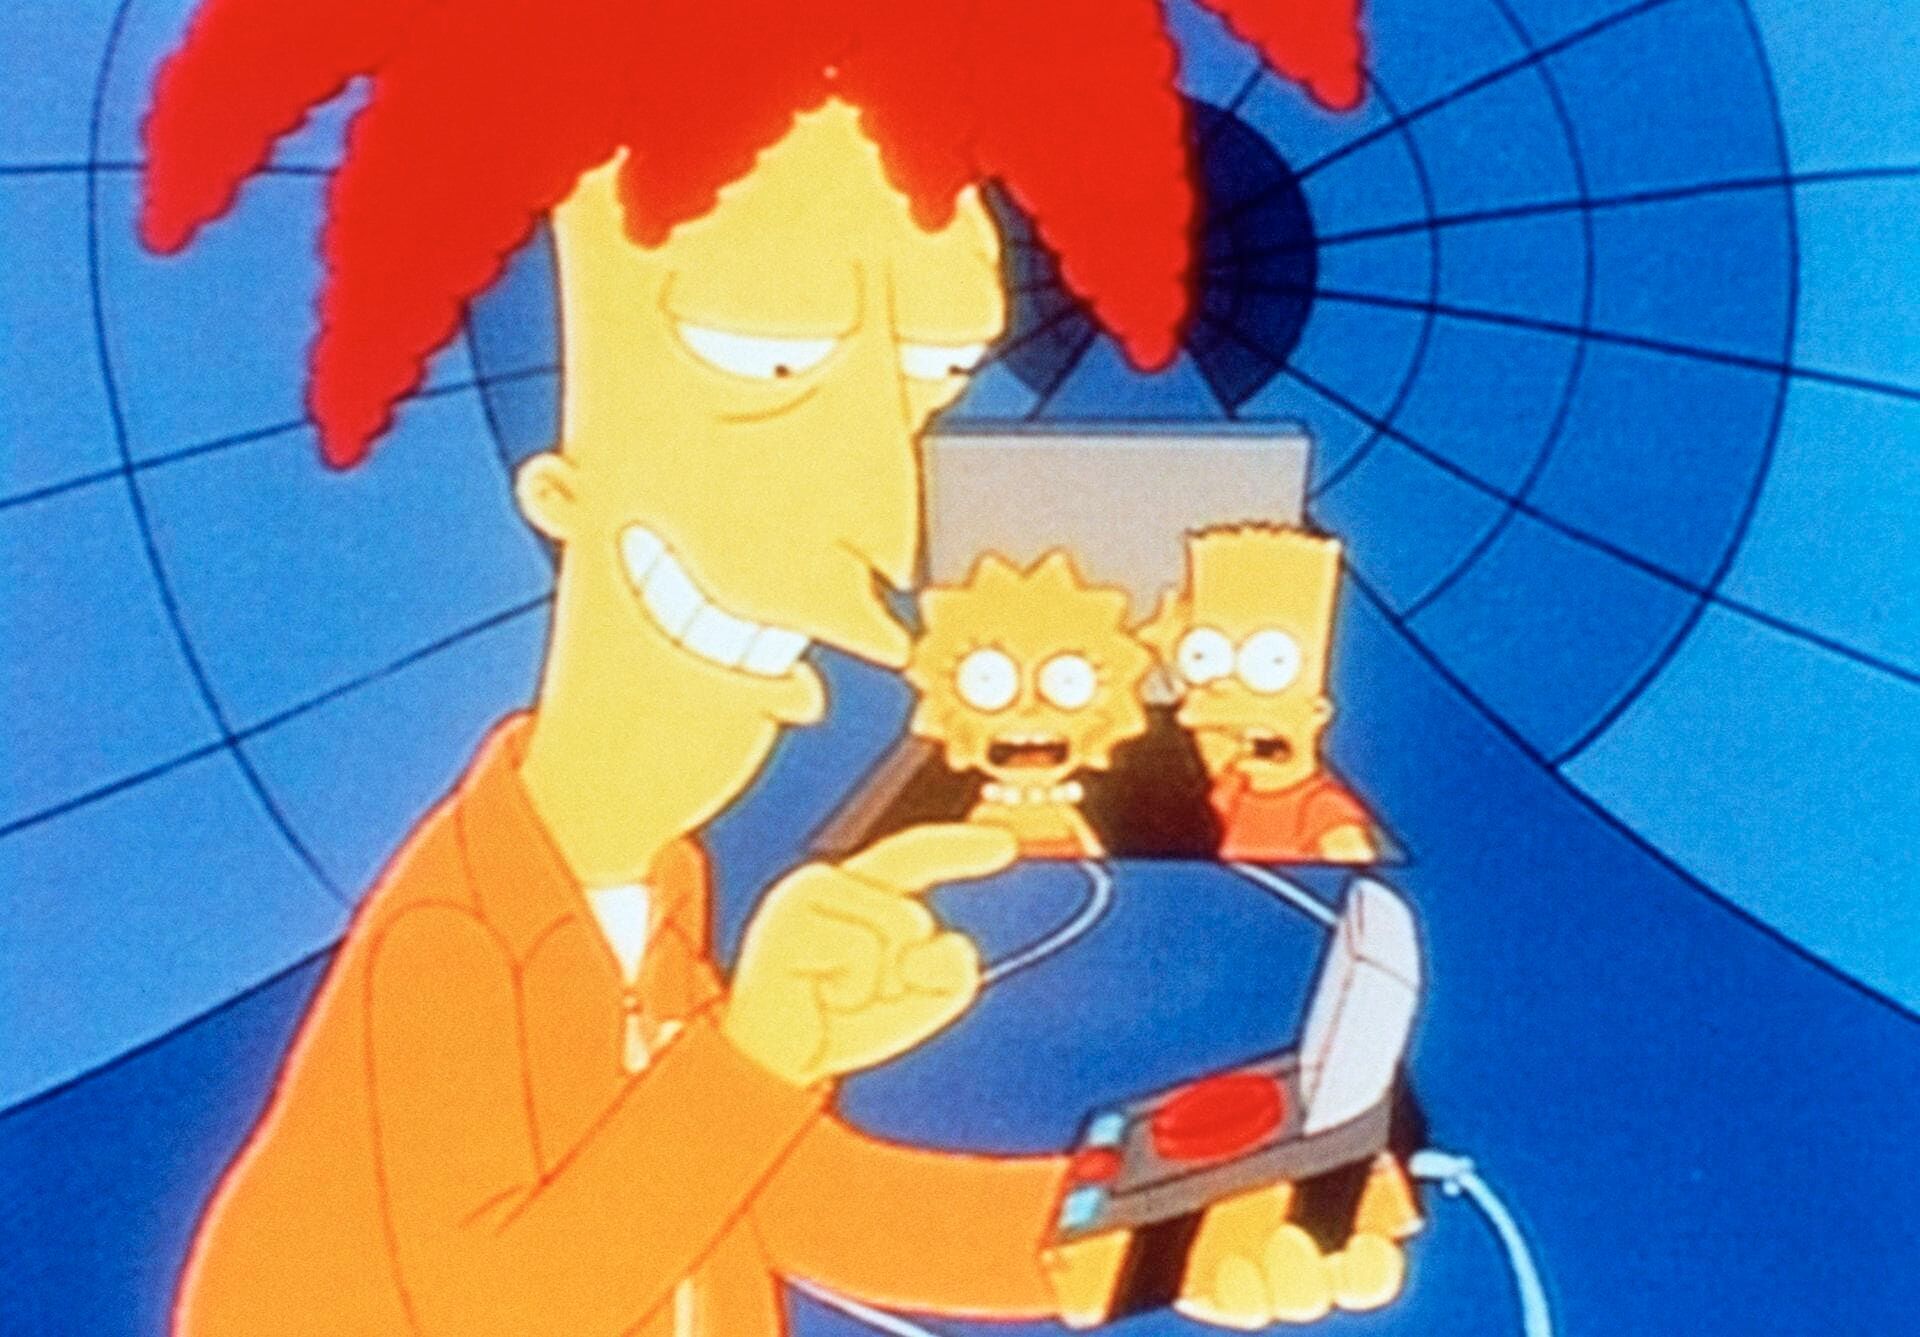 The Simpsons - Sideshow Bob Roberts